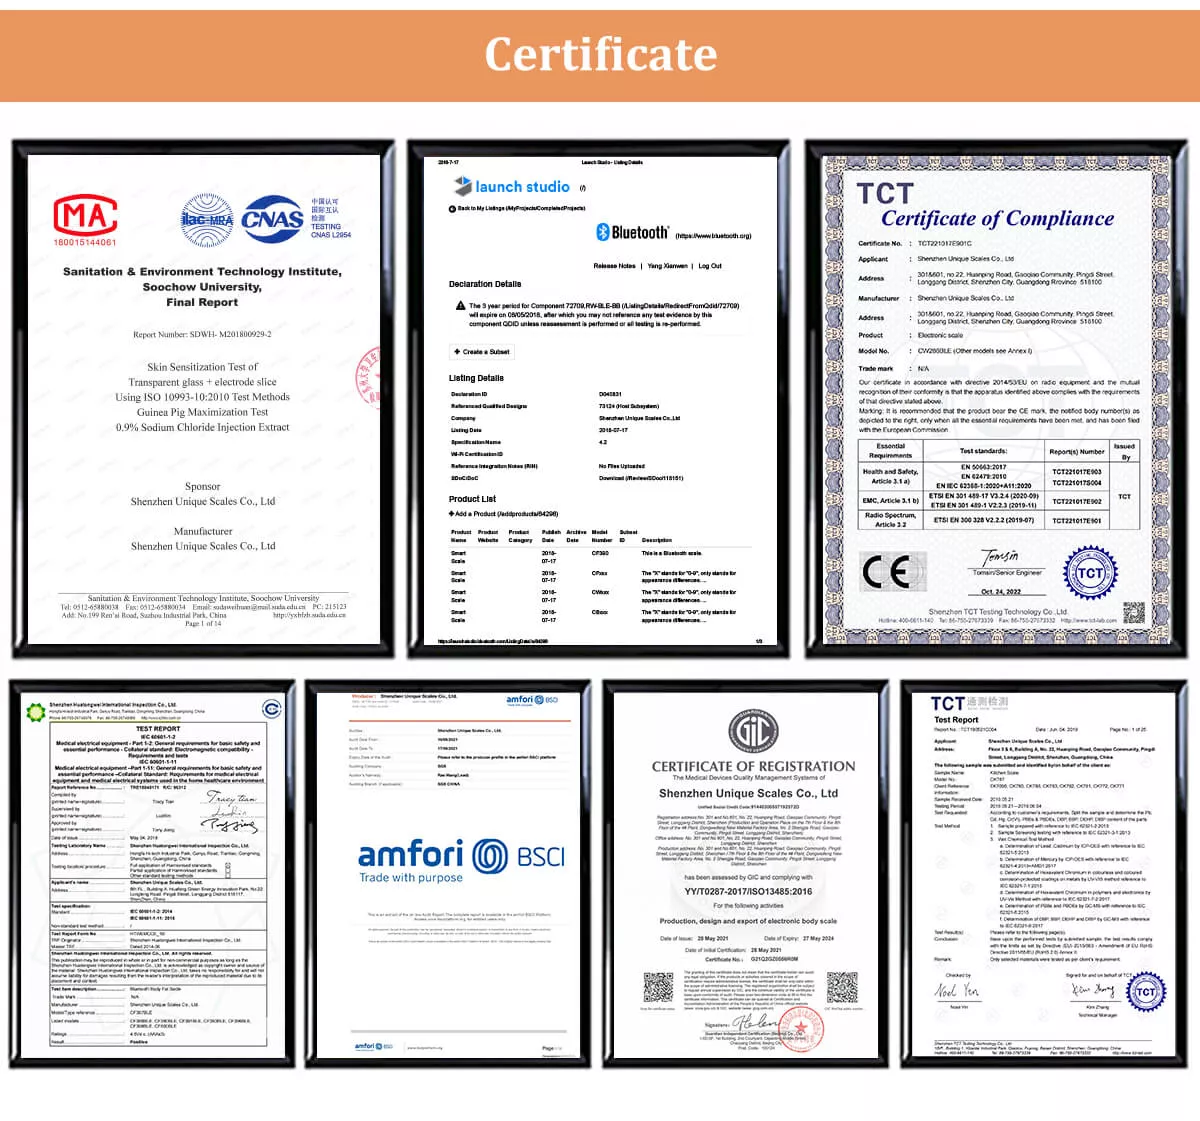 digital cooking scales's certificate